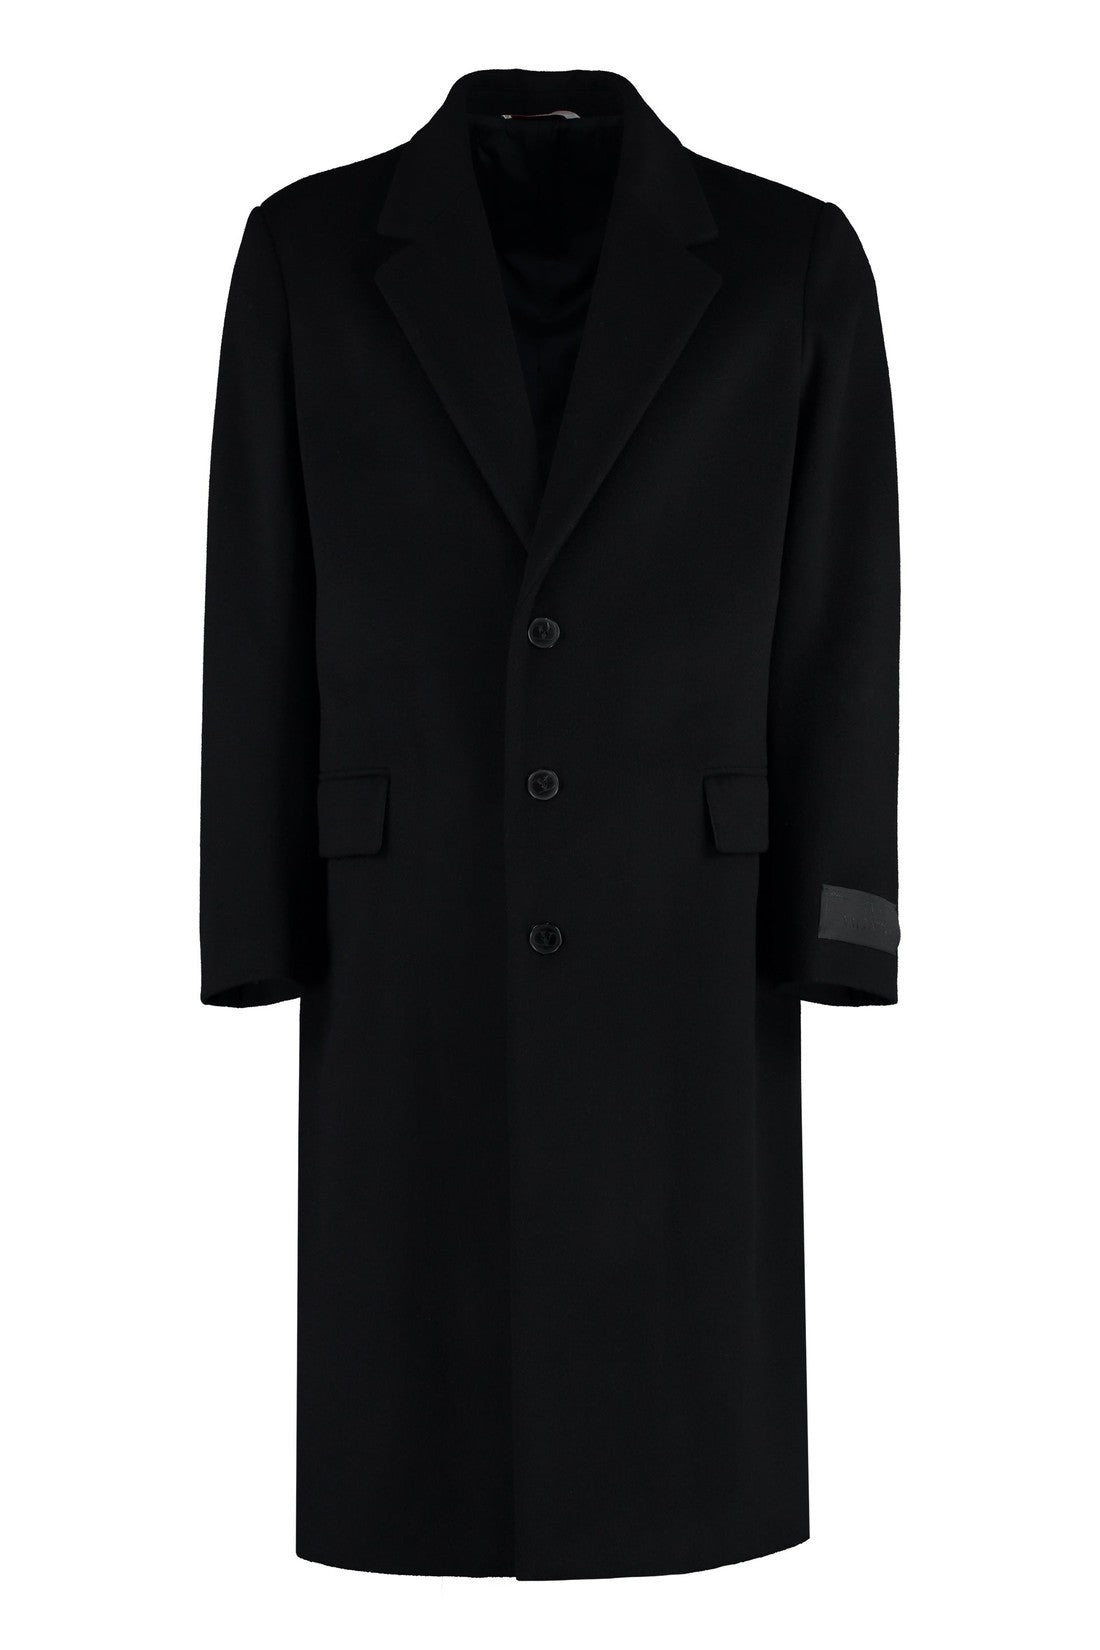 Valentino-OUTLET-SALE-Wool blend coat-ARCHIVIST